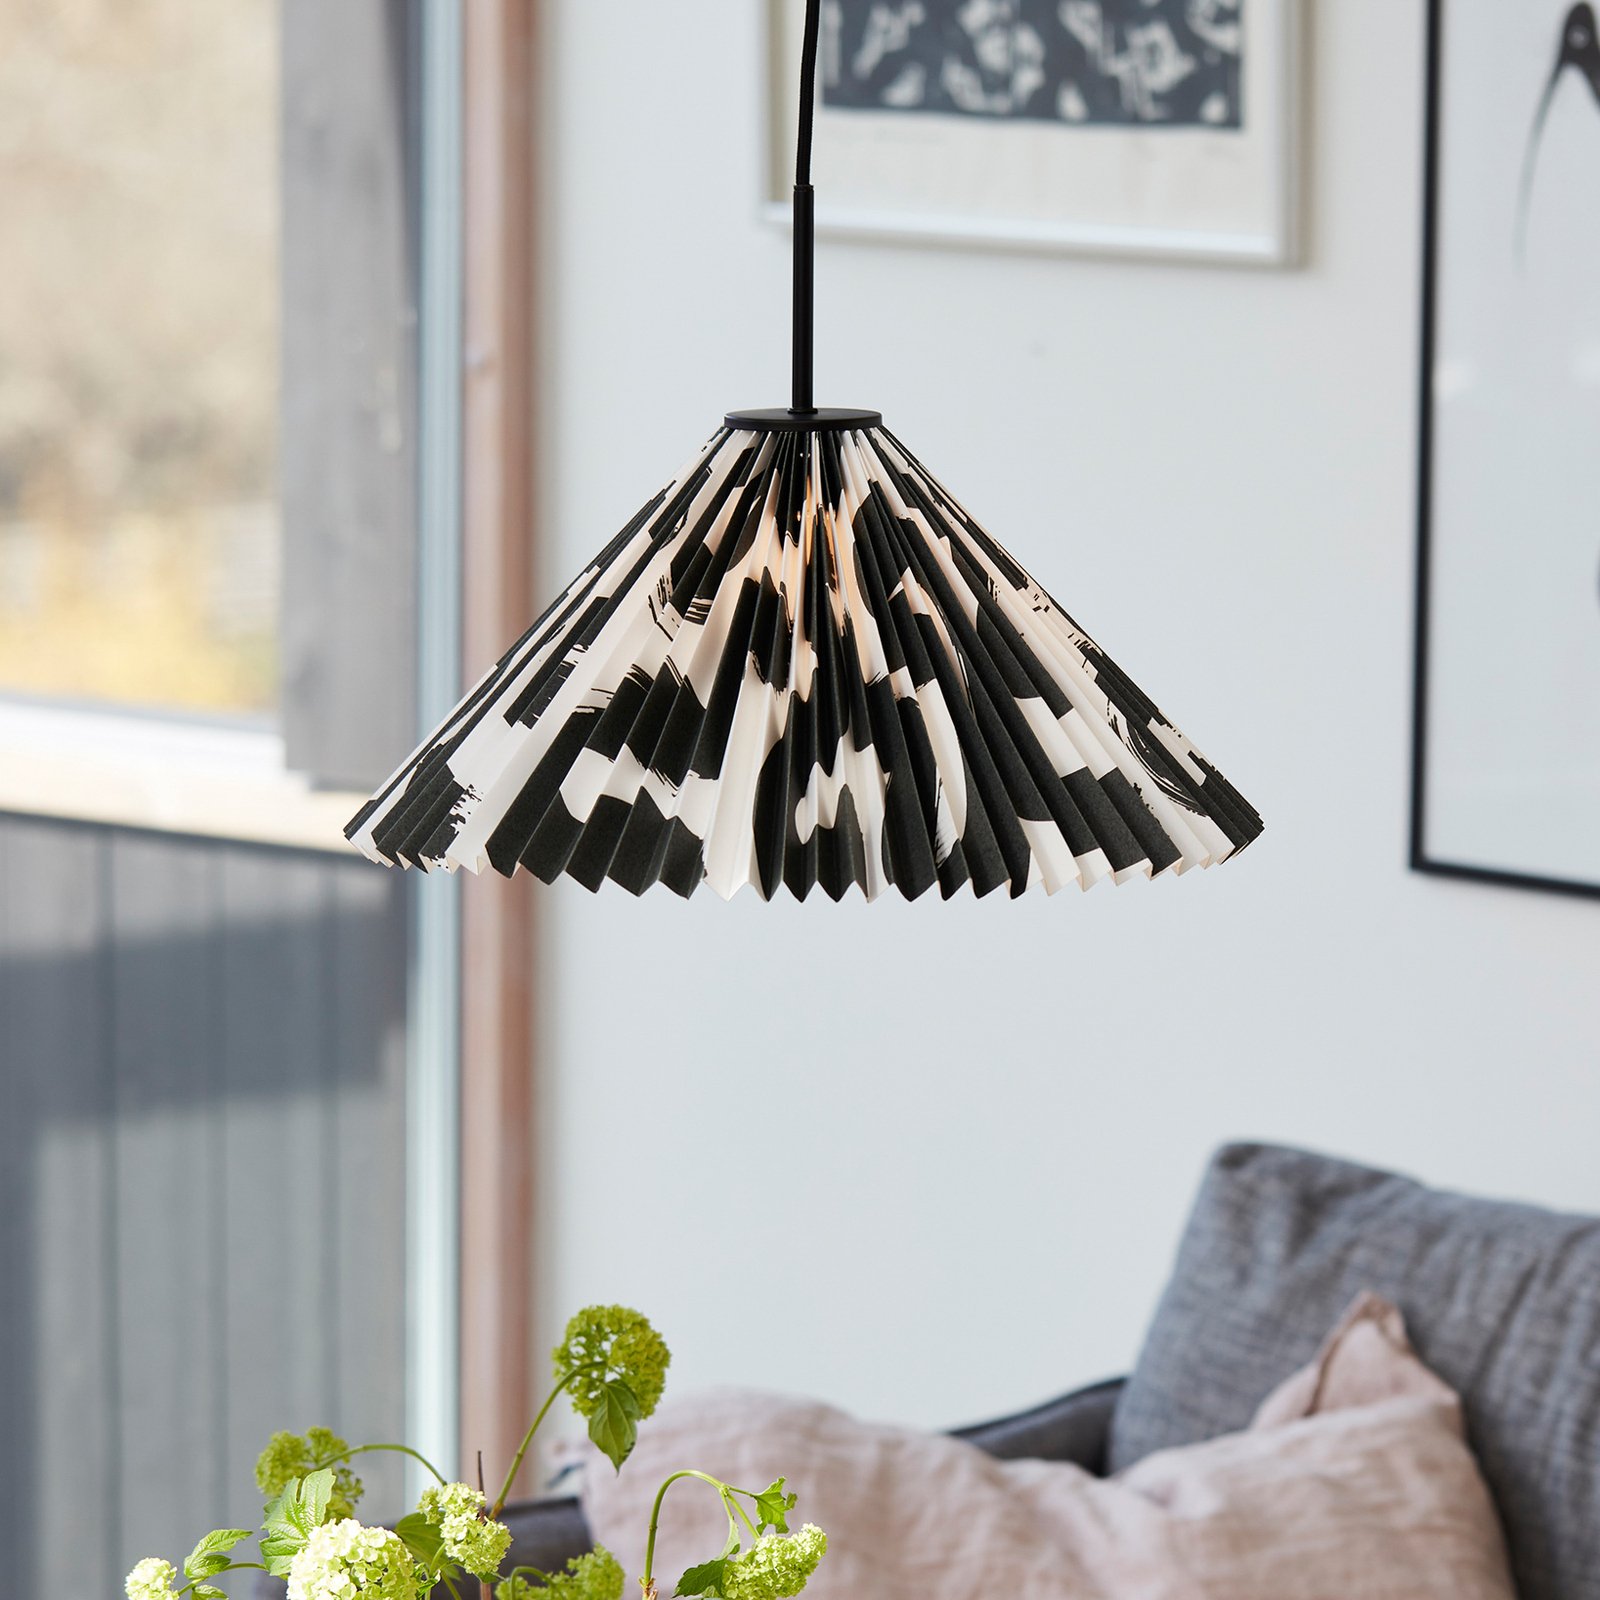 PR Home Polly pendant light in an origami design